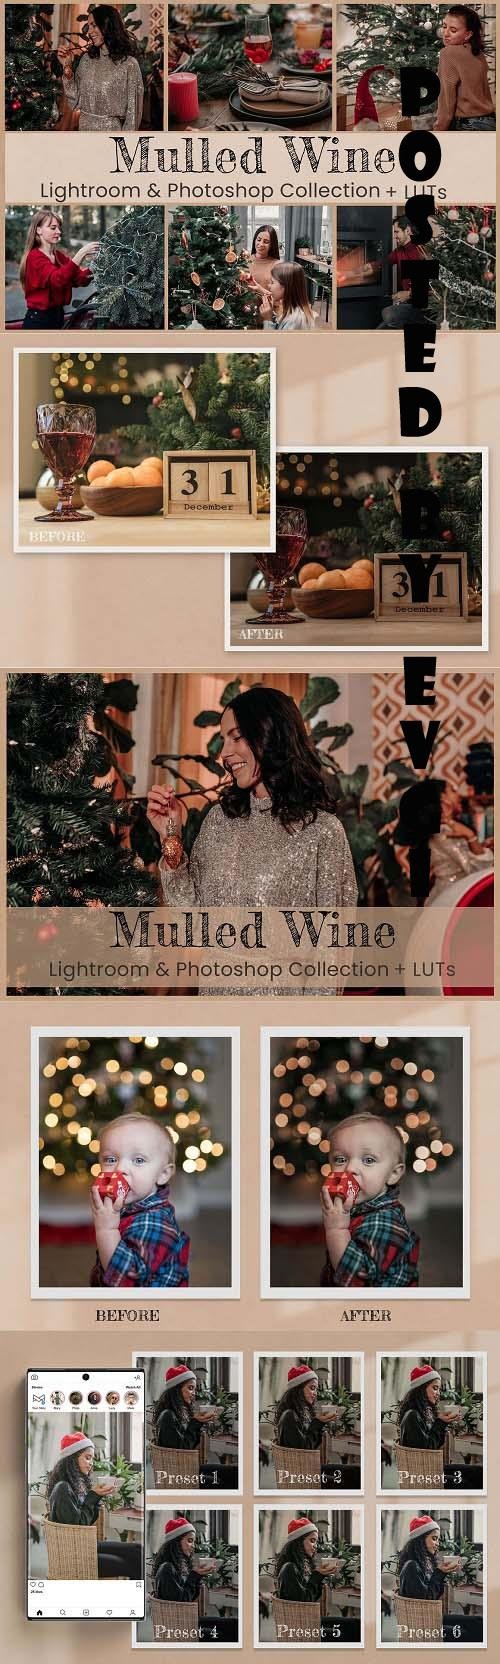 Mulled Wine Lightroom Photoshop LUTs - 6577444